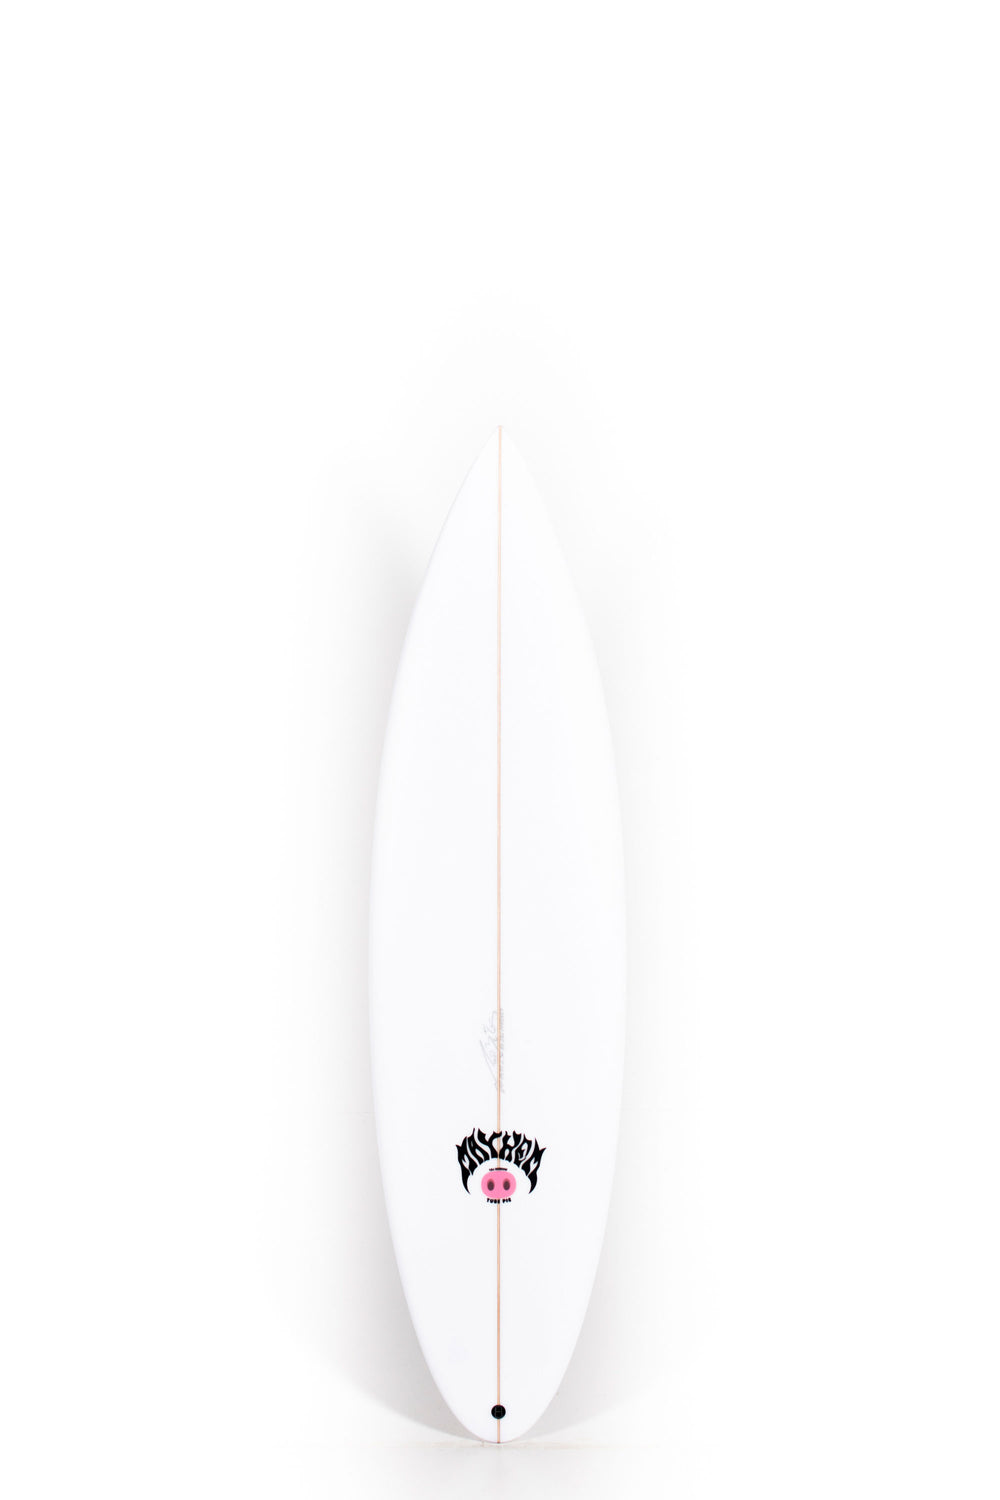 Pukas Surf Shop - Lost Surfboards - TUBE PIG by Matt Biolos - 6’4” x 19,5 x 2,56 - 33,25L - MH12557